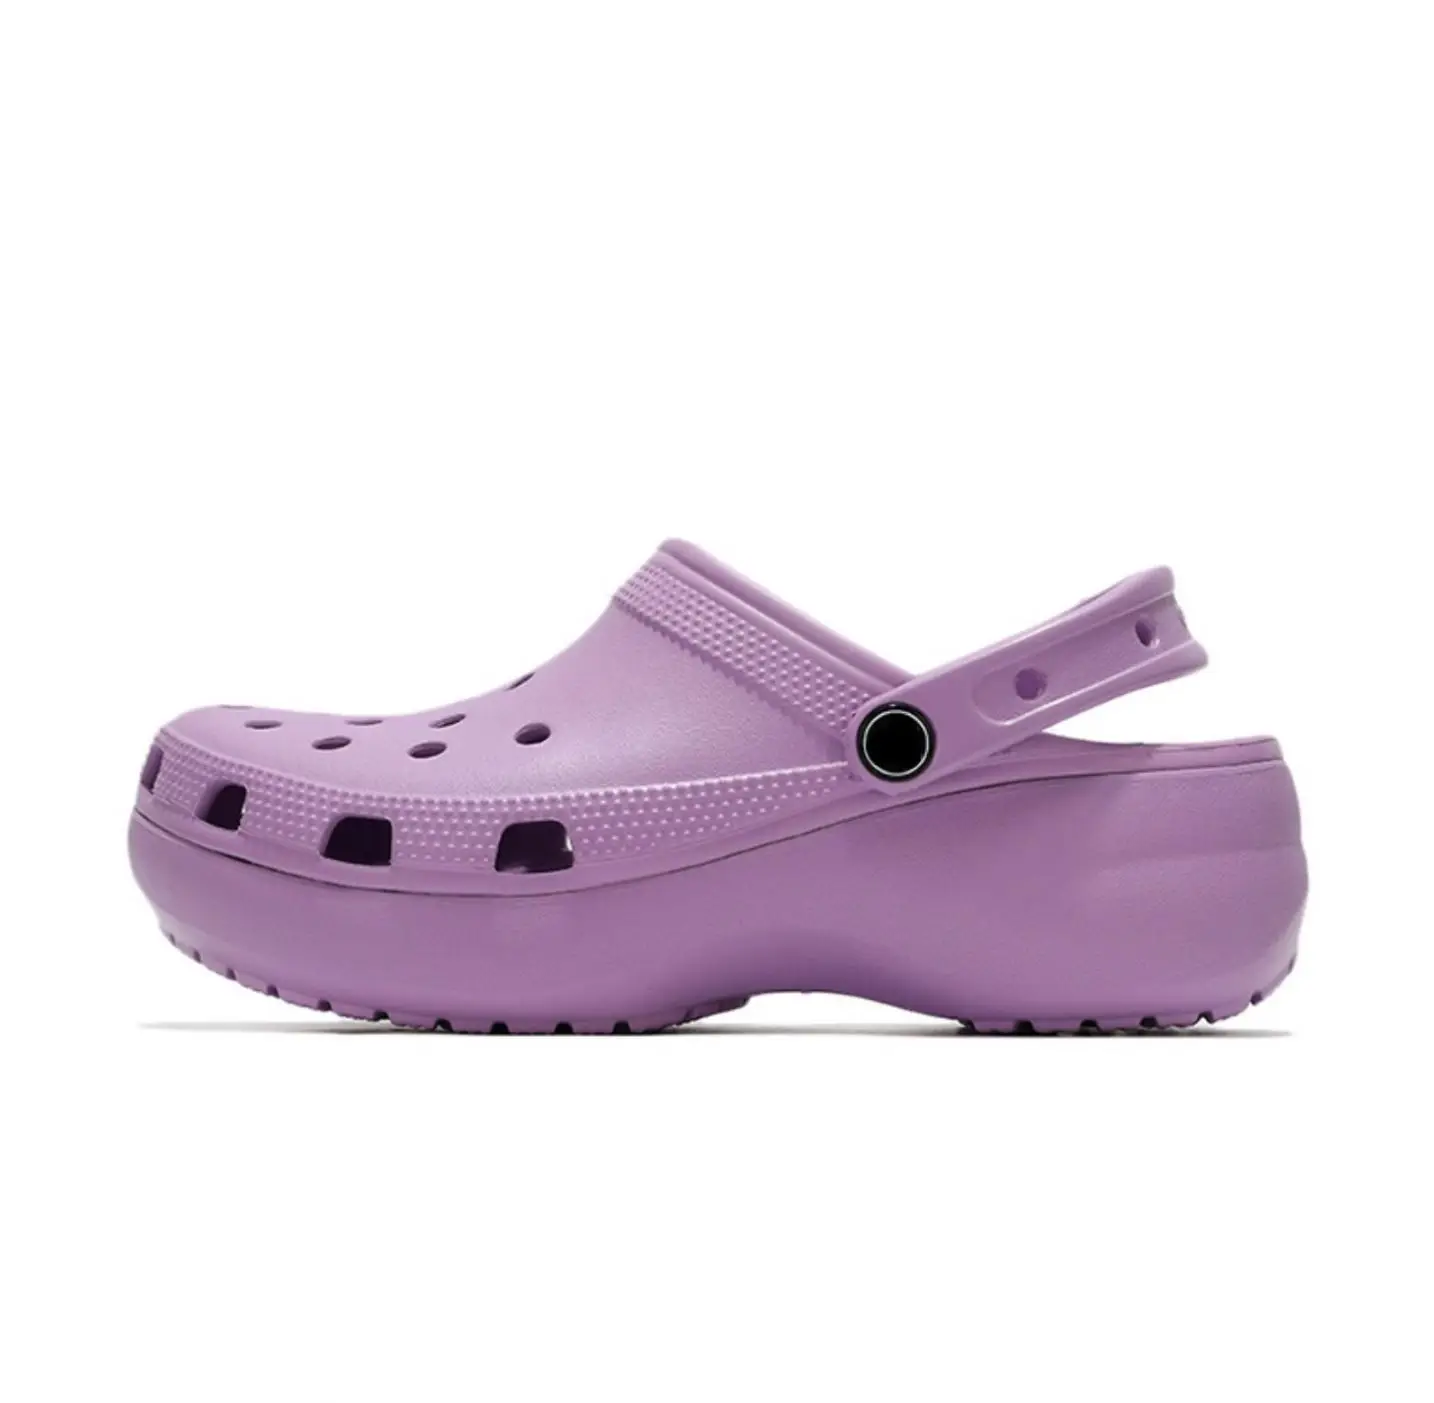 

BUSY GIRL XY1025 Black platform clogs high heel sandals slipper clogs 2021 for women, White/black/purple/pink